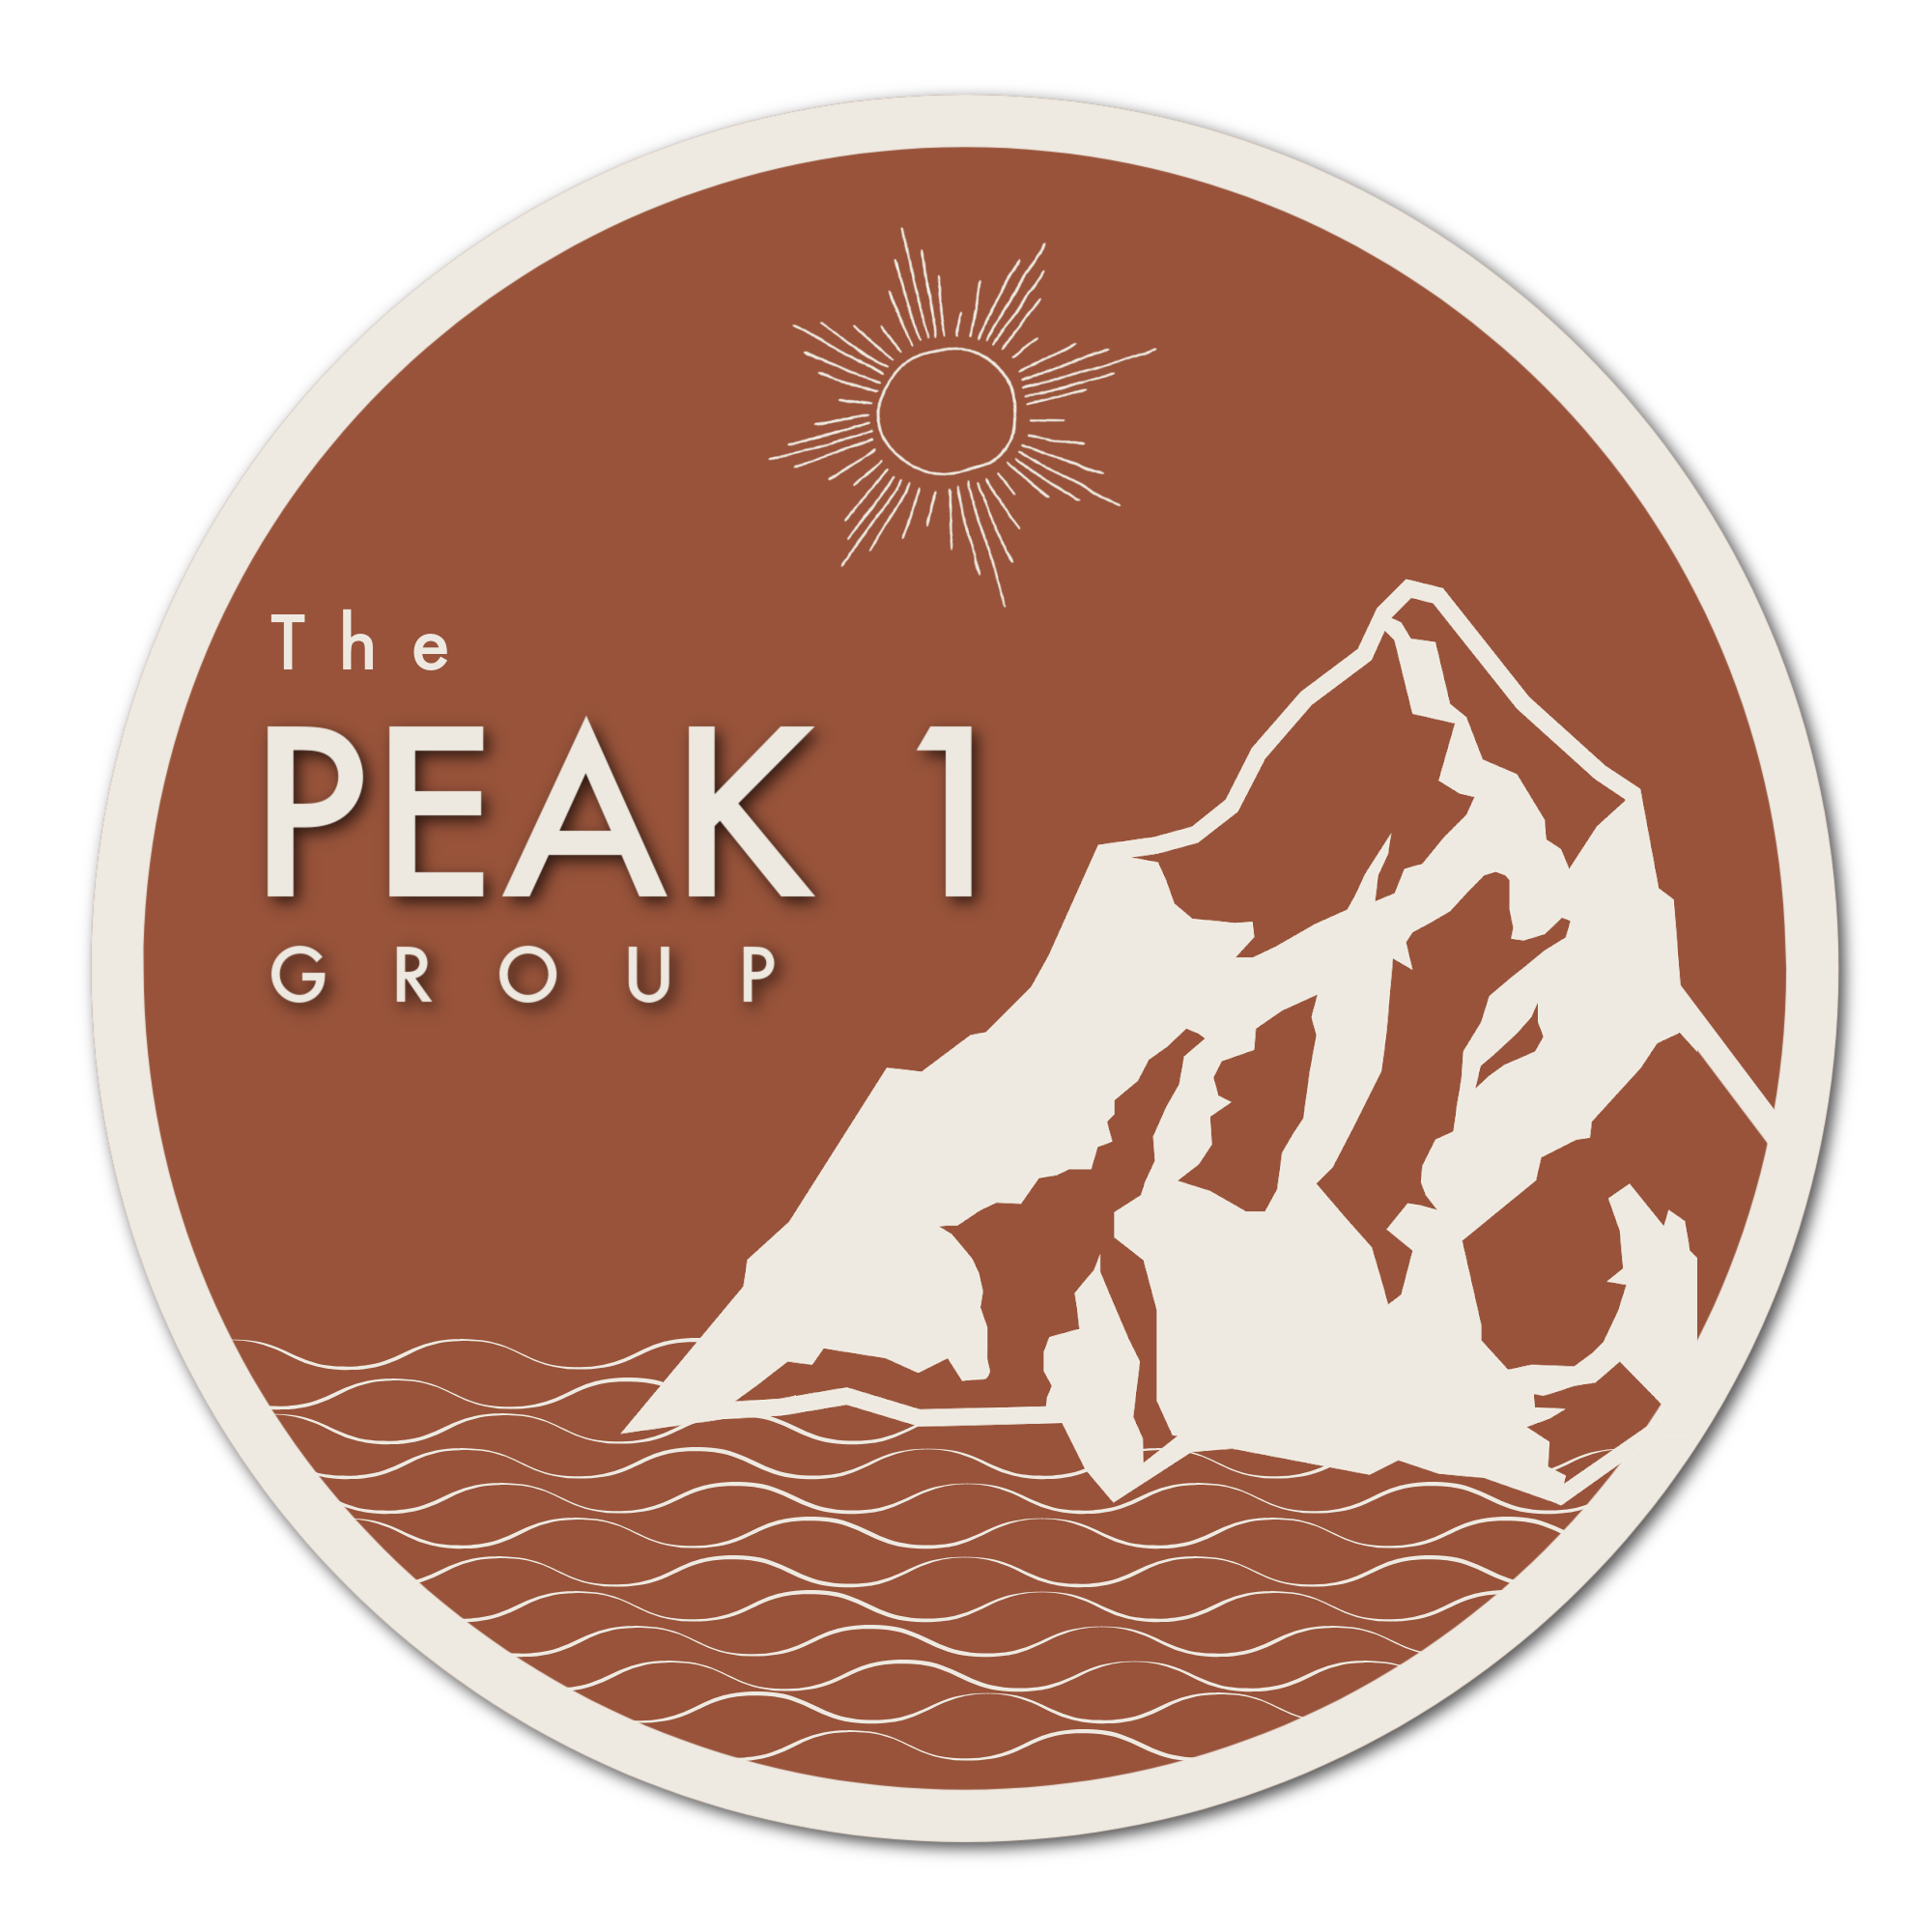 The Peak 1 Group